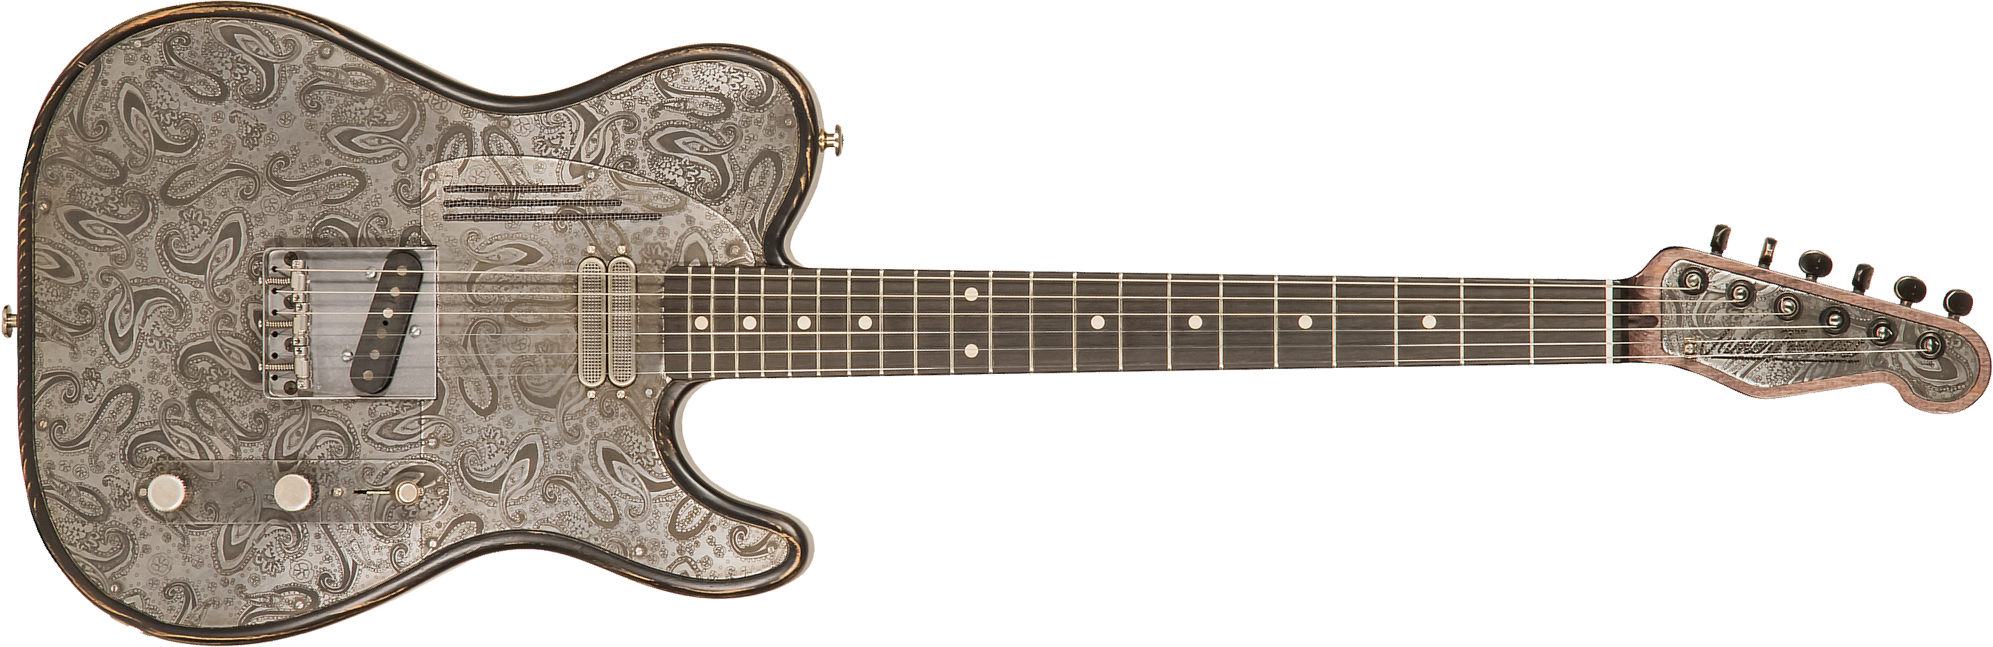 James Trussart Steeltopcaster Sh Ht Eb #21135 - Antique Silver Paisley - Tel shape electric guitar - Main picture